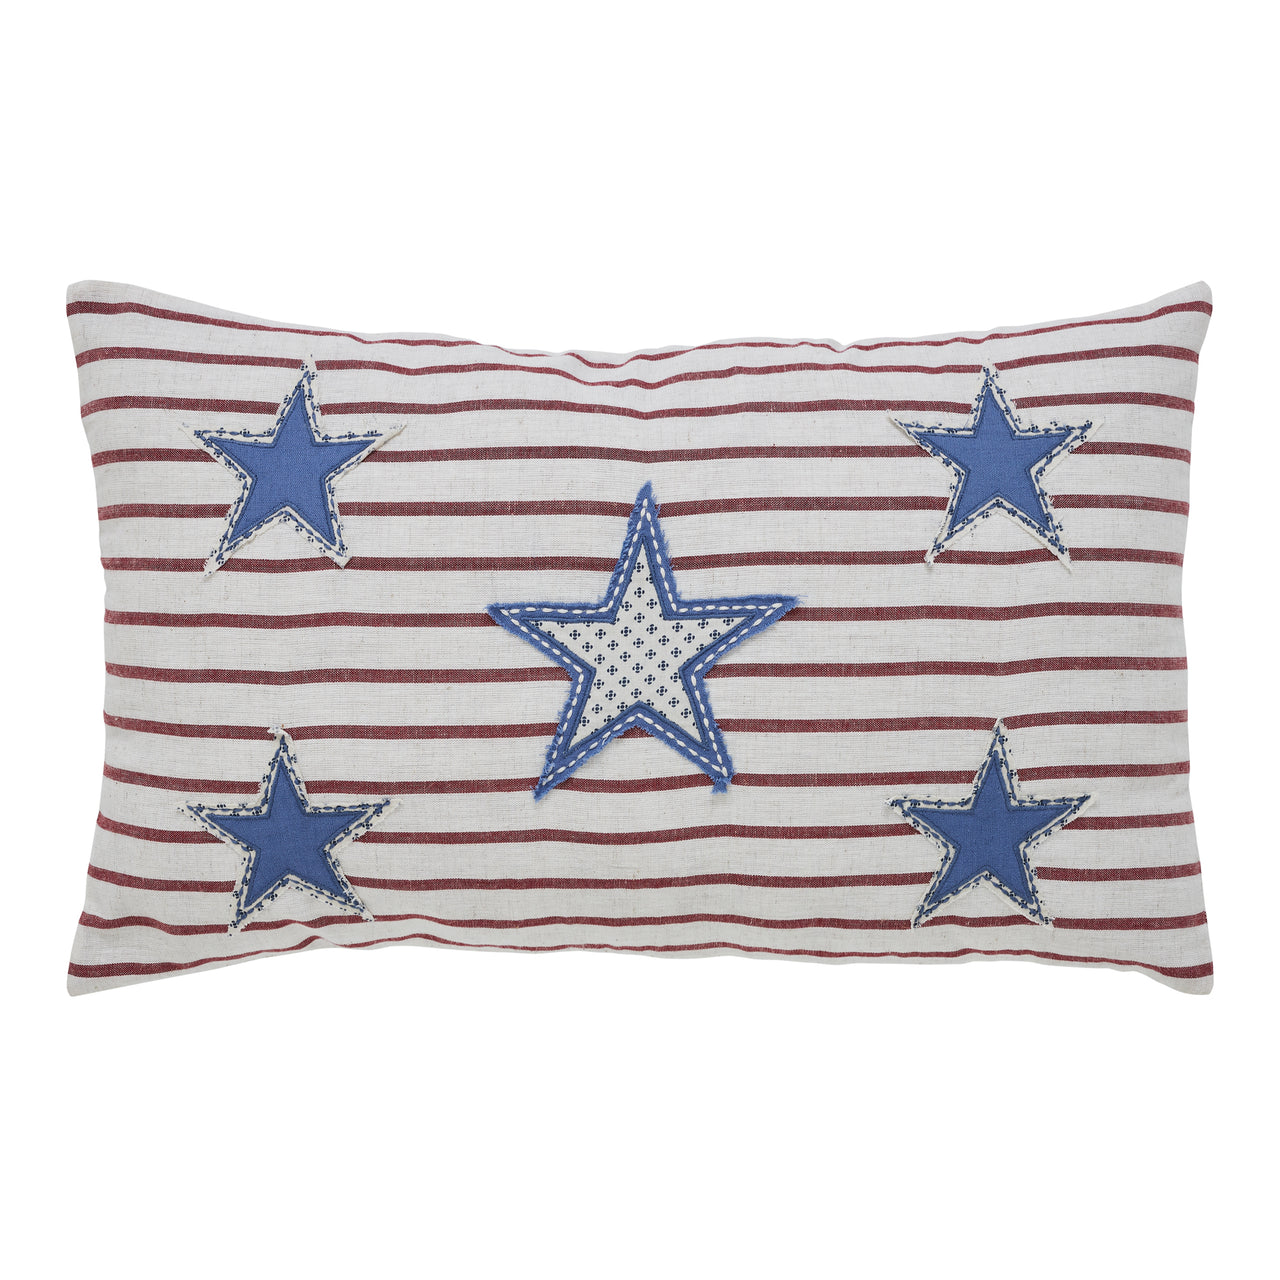 Celebration Star Applique Pillow 14x22 VHC Brands